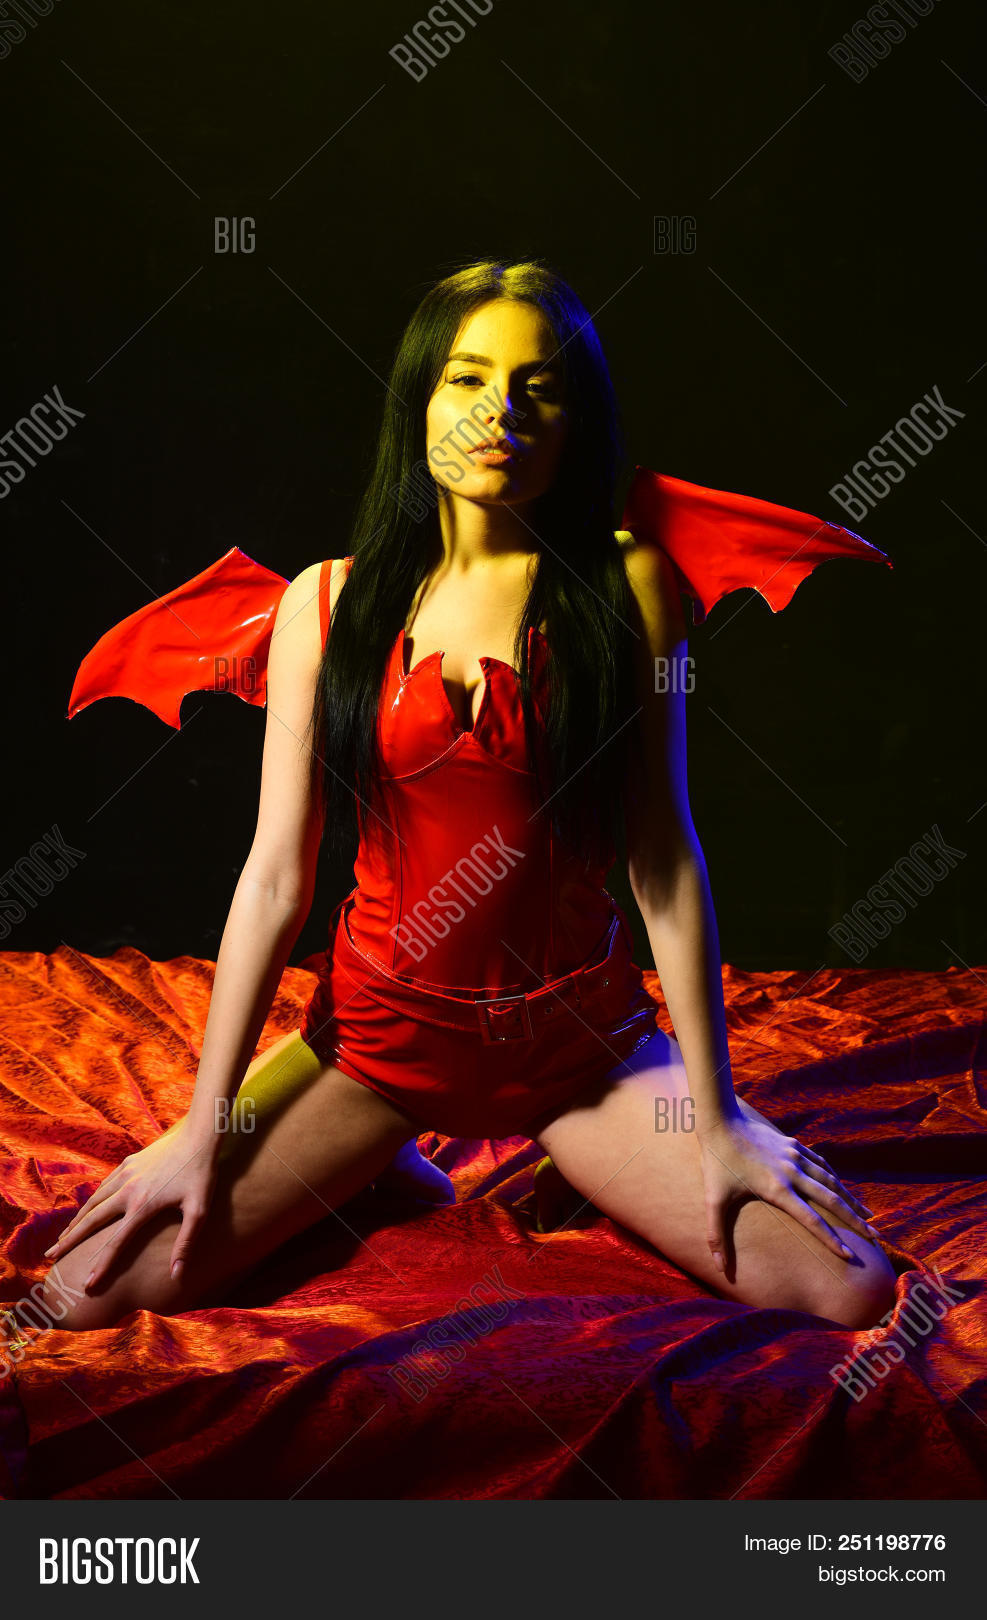 charles lawrie add sexy demon girl photo